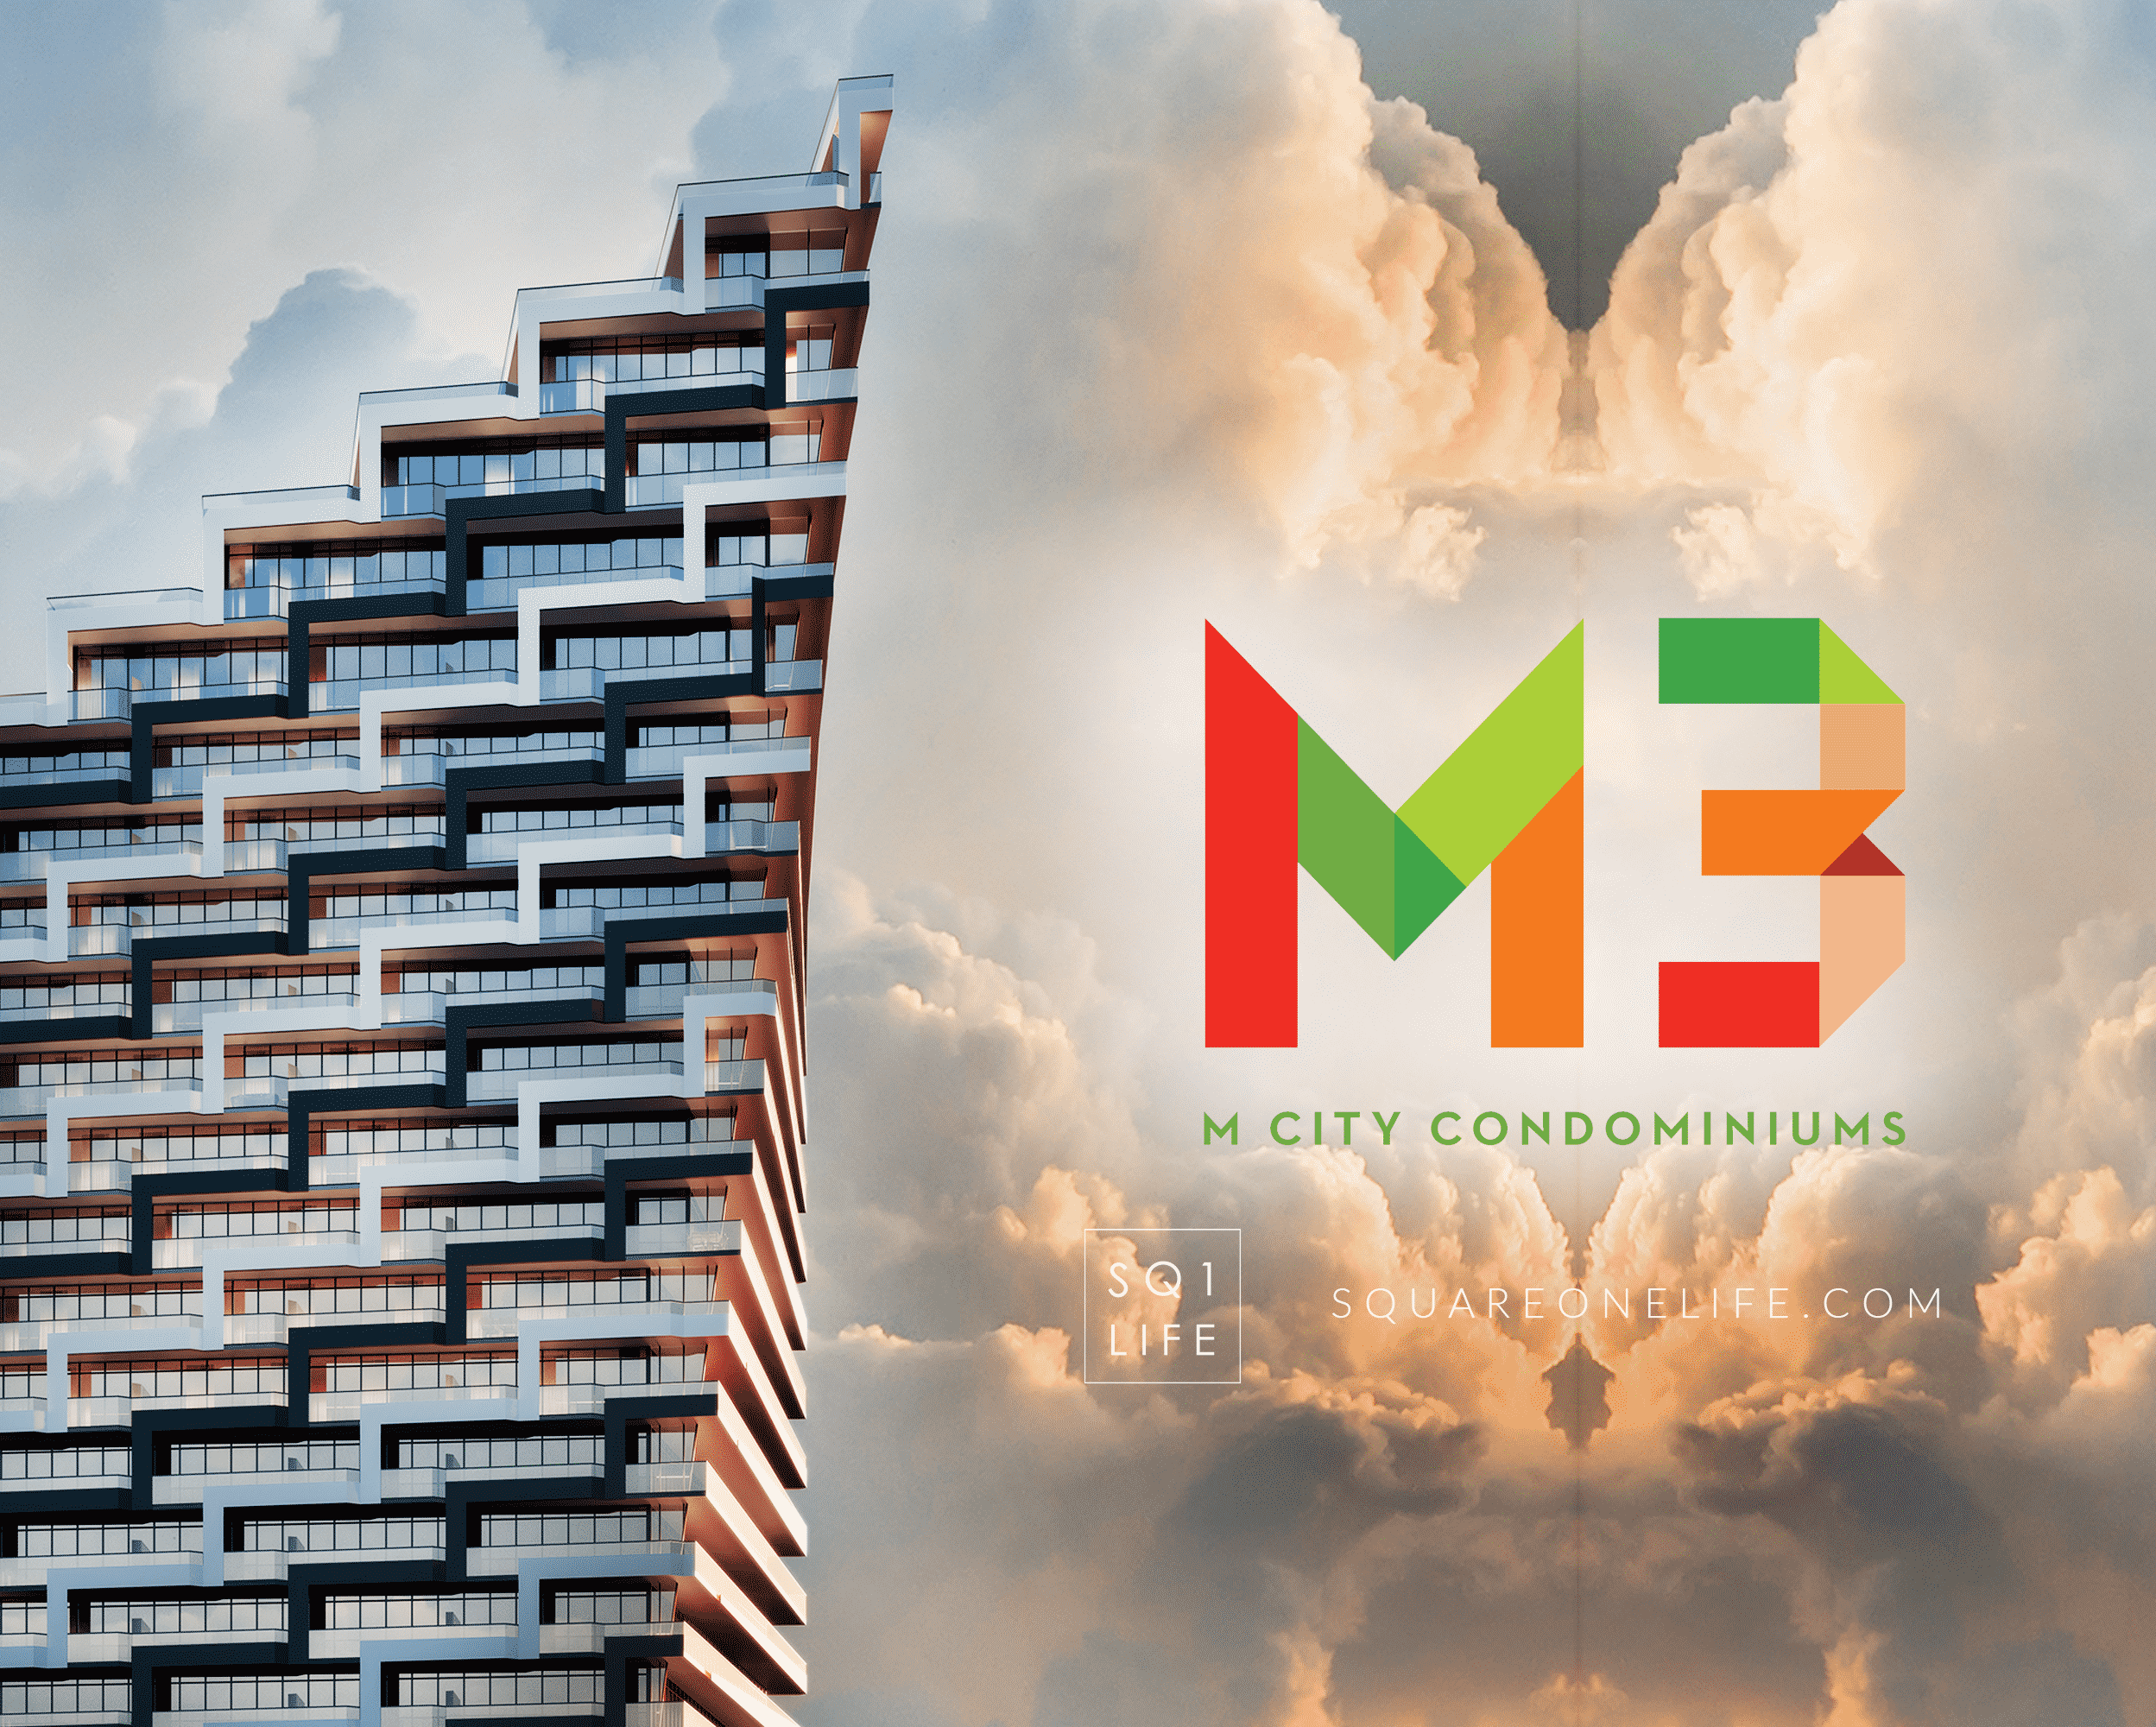 m city M CITY Condos Tower 3 / M CITY Condos Phase 3 m3 condos mississauga square one life OFFICIAL